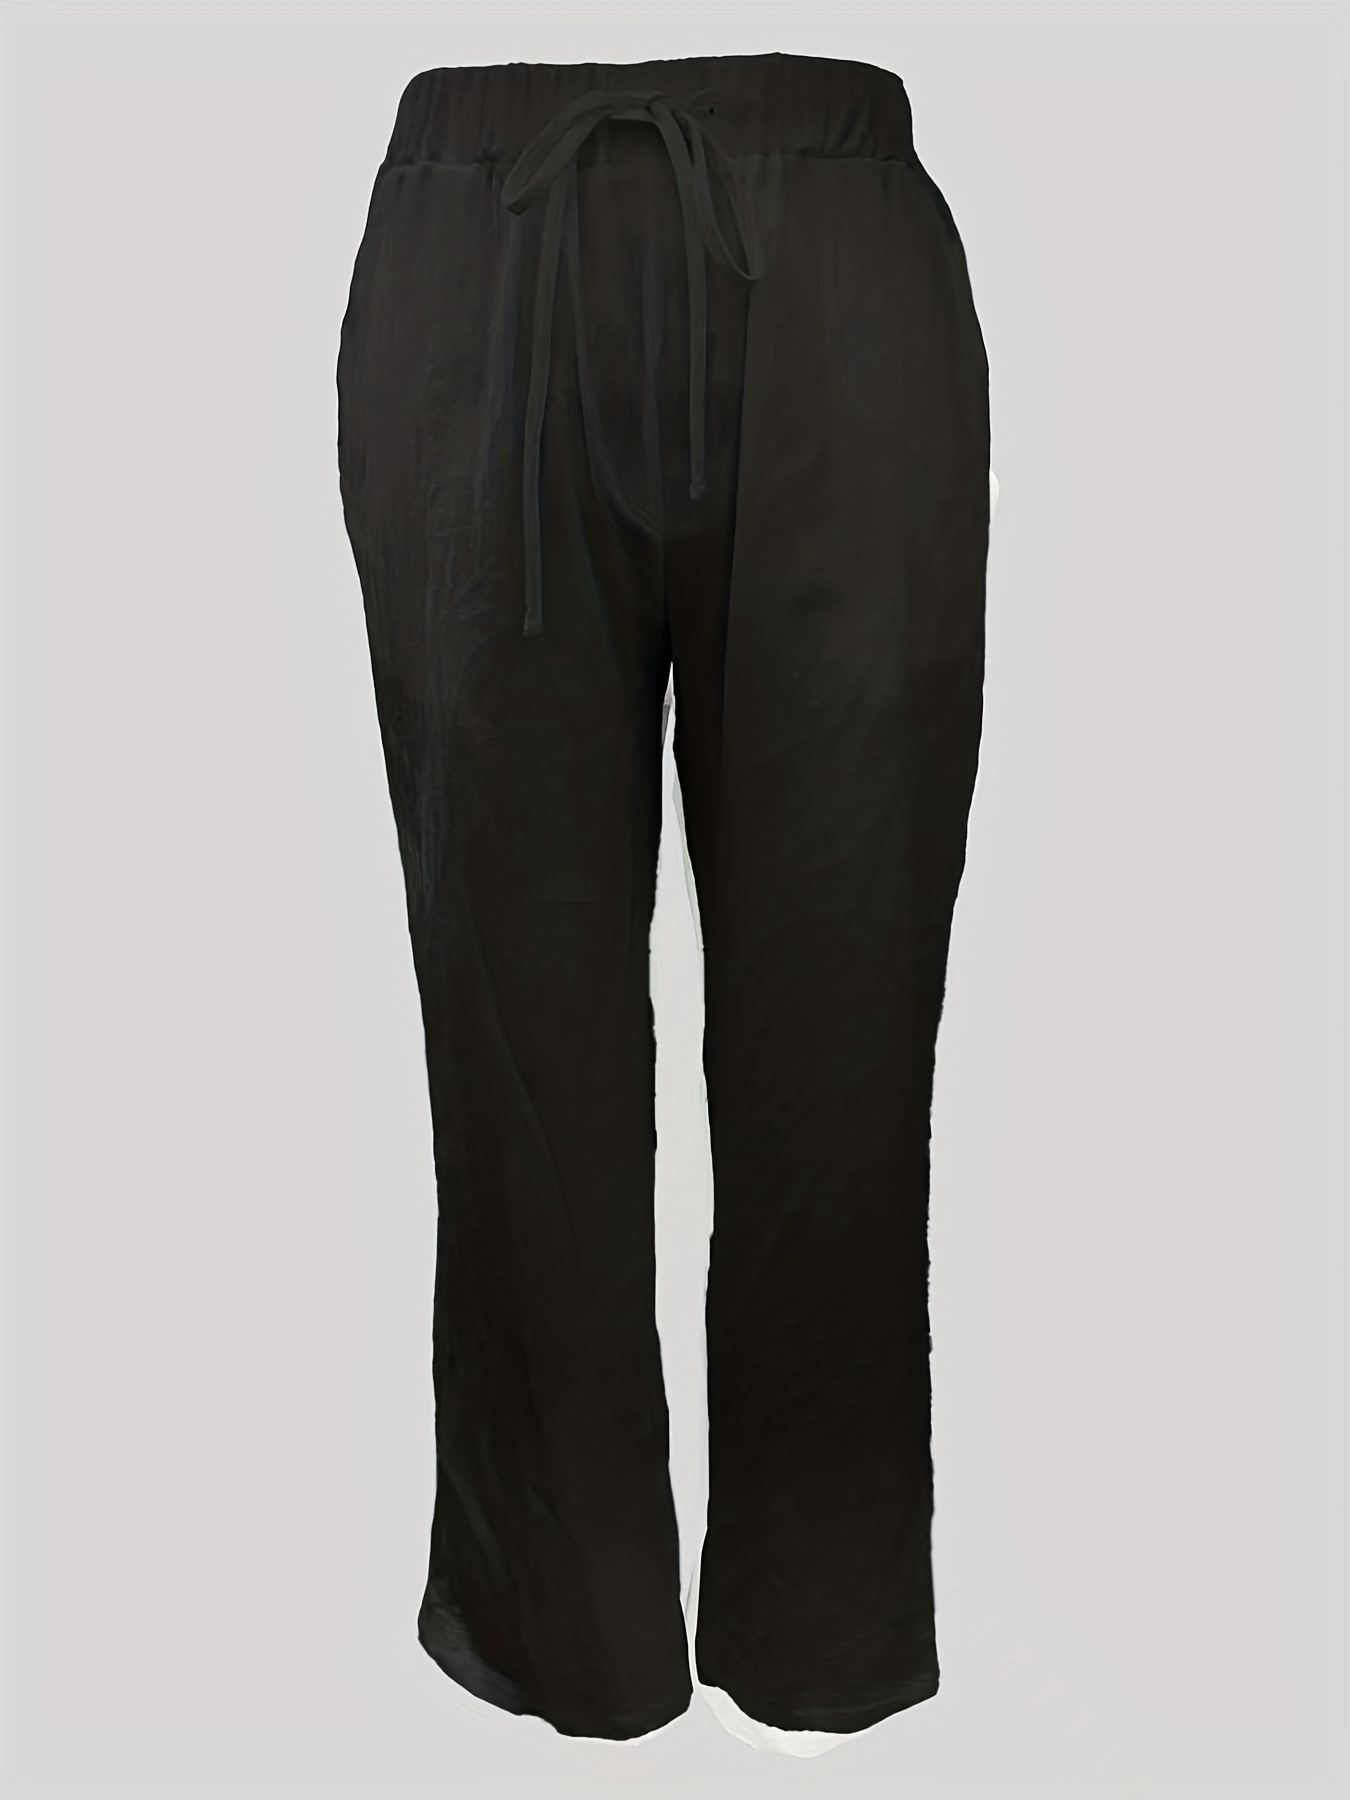 Versatile Loose Fitting Pants  Perfect Loose Fit Drawstring Pants